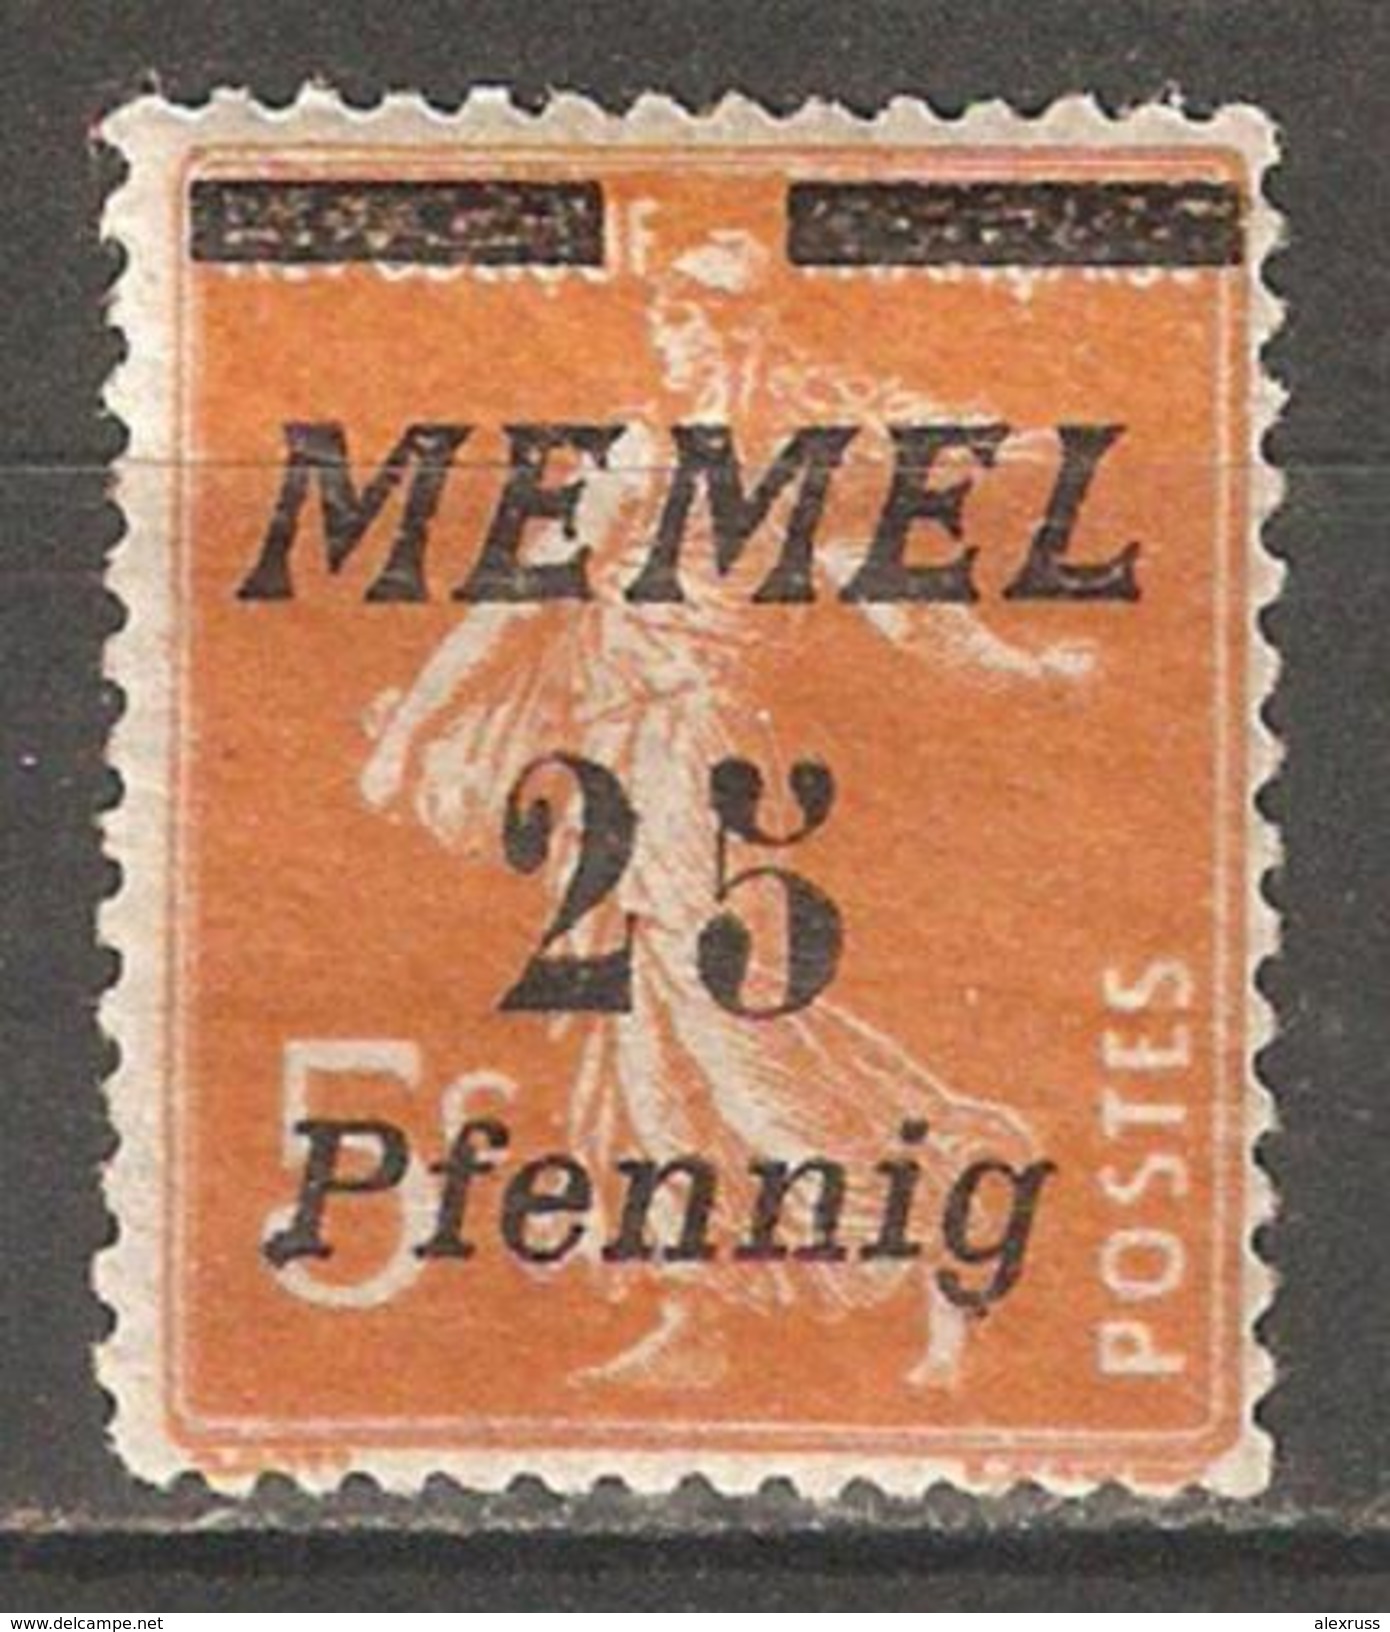 Memel 1922, 25pf On 5c, Scott # 56*, VF Mint Hinged* L2 (A-7) - Unused Stamps